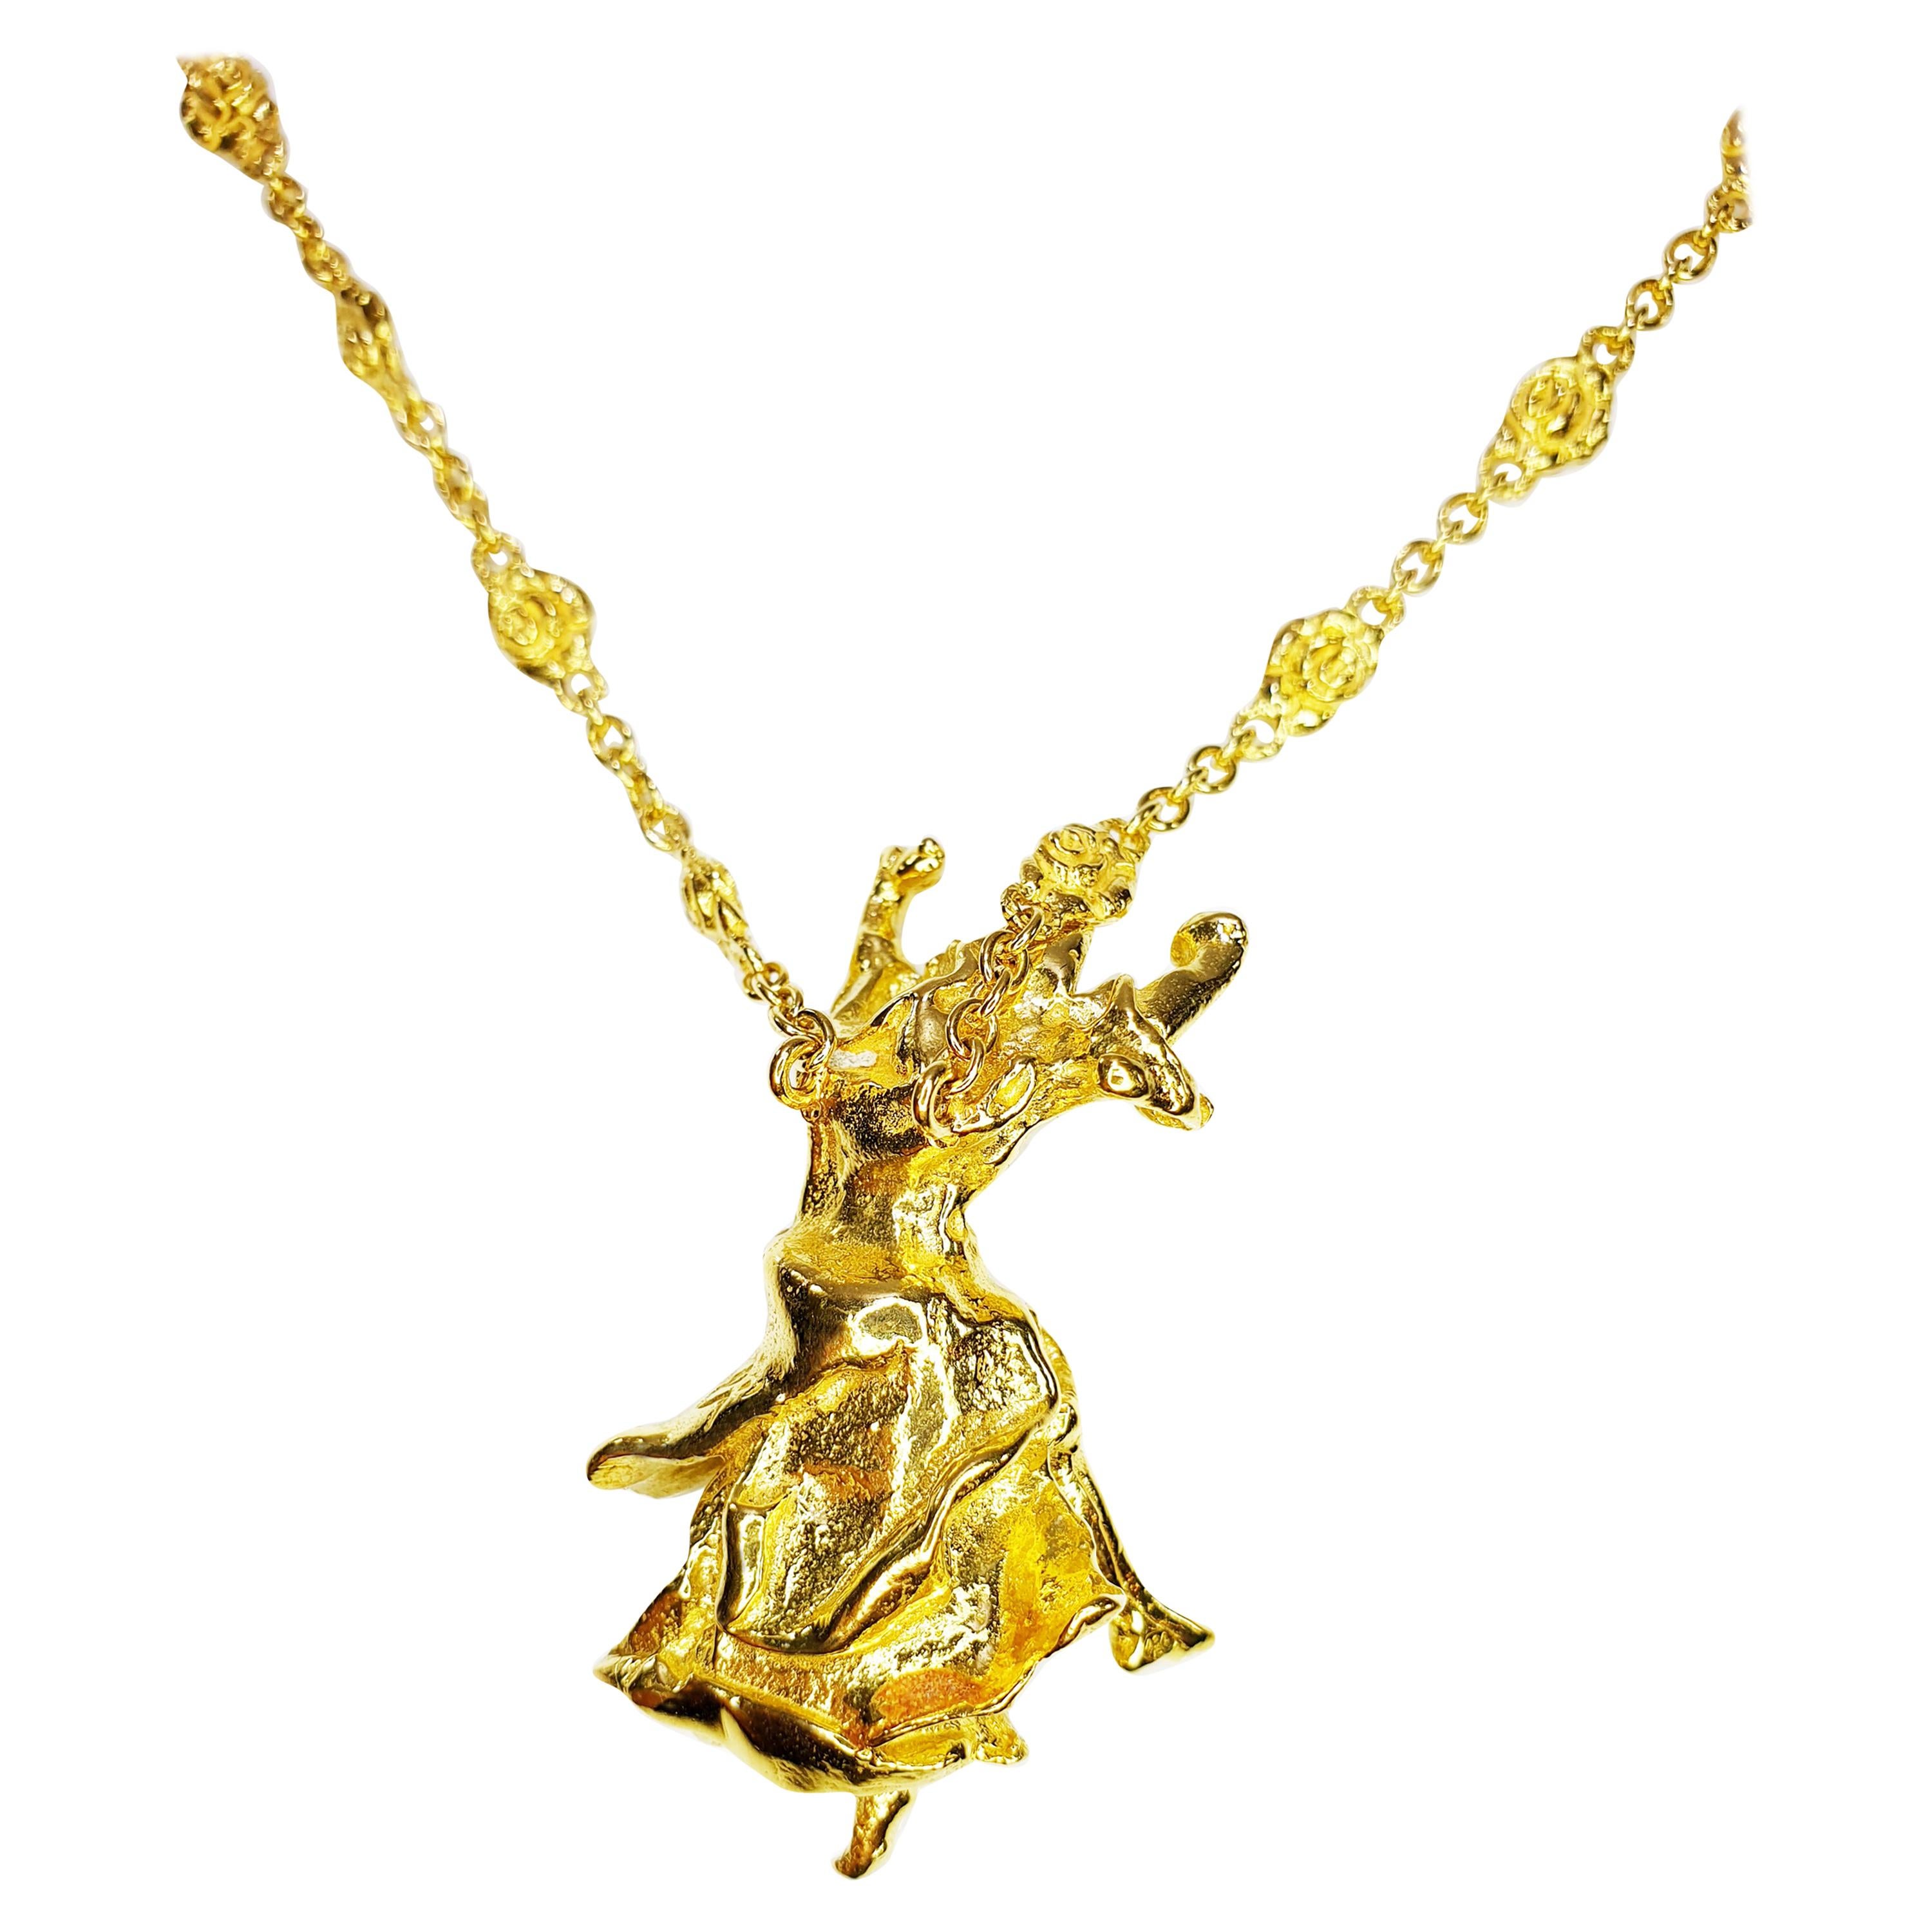 Solid 18k Gold Salvador Dalí Carmen of Crótalos Necklace Sculpture For Sale